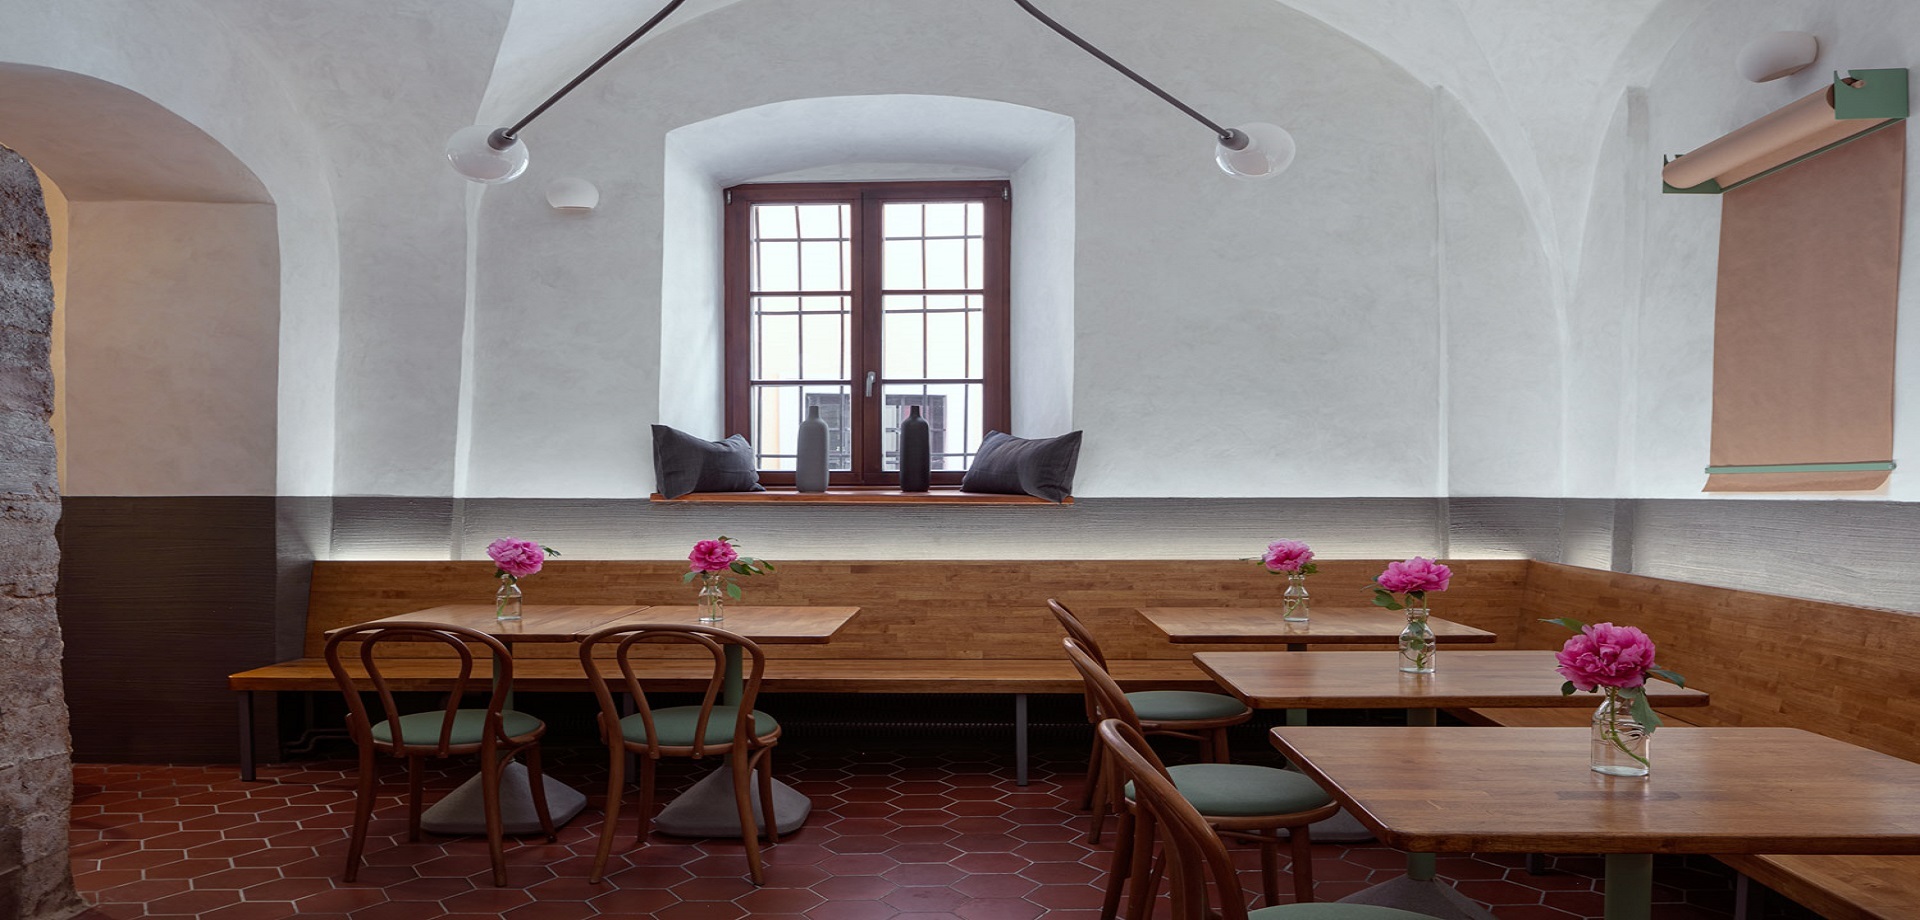 Restaurat - Café Harmonia u sv. Jakuba (2)